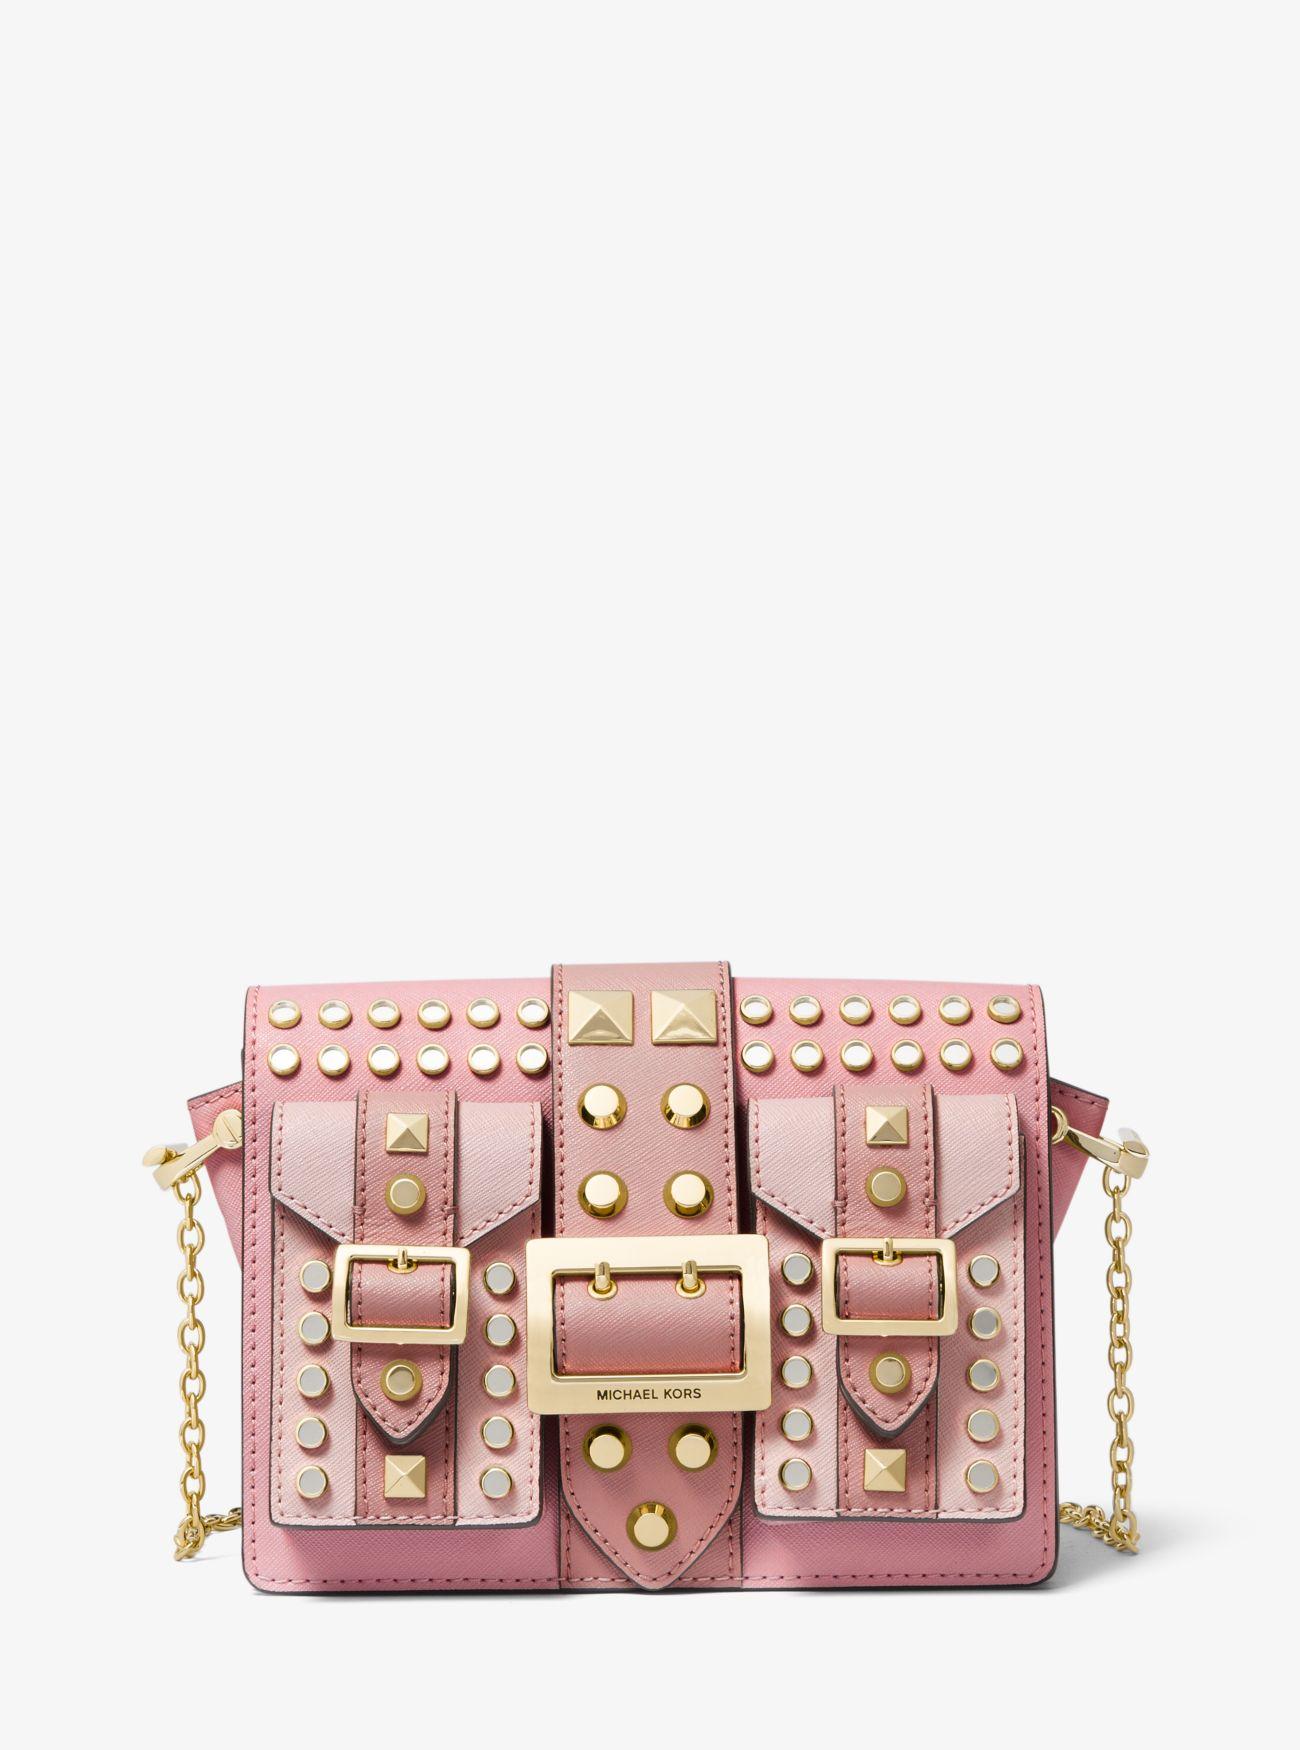 michael kors pink studded purse